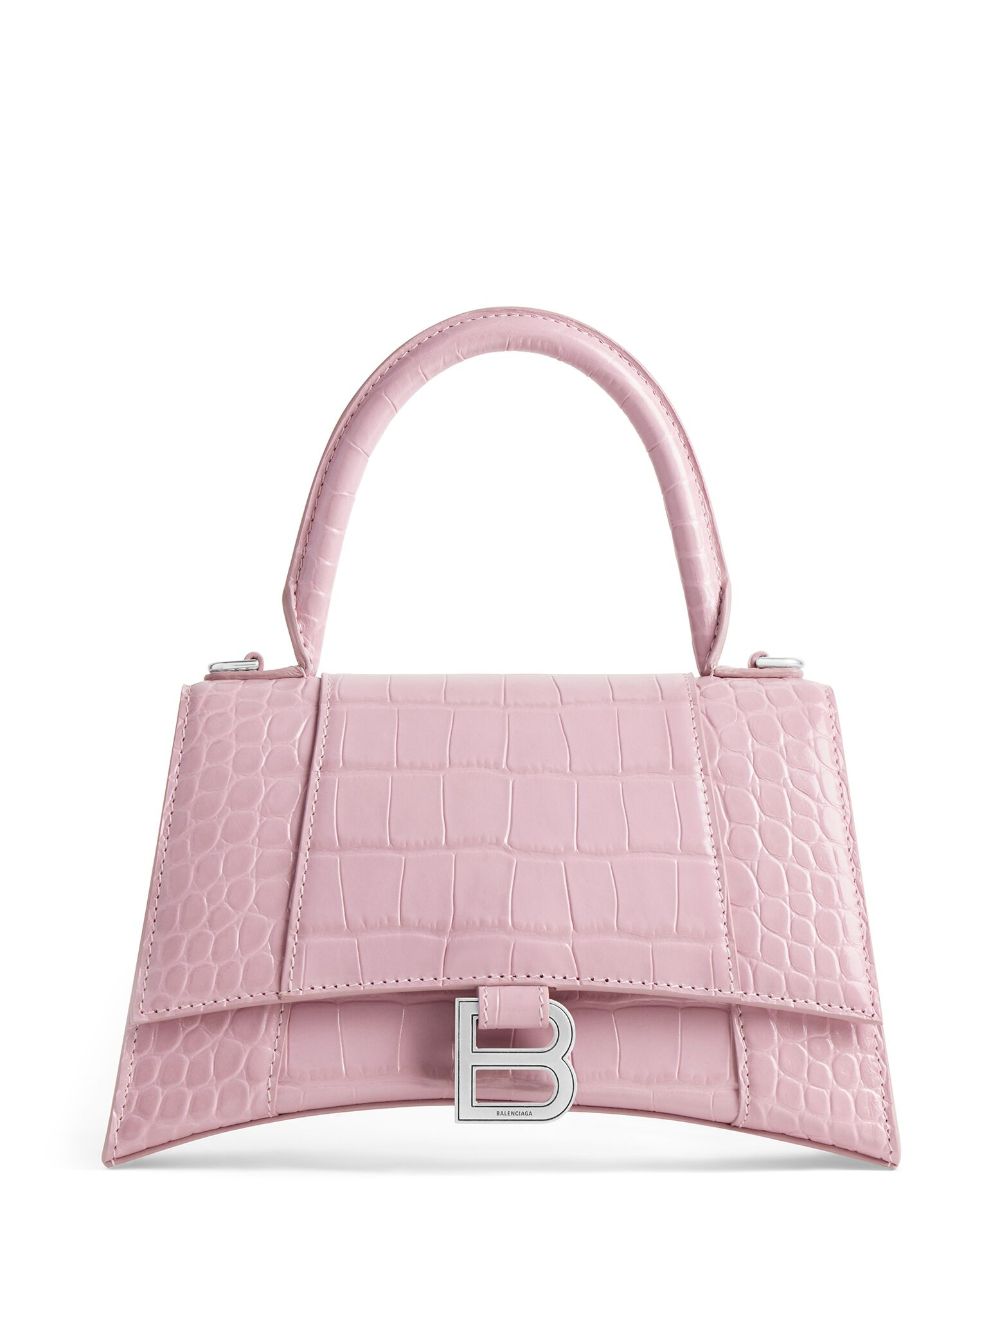 Hourglass Small Croc Effect Tote Bag in Pink - Balenciaga